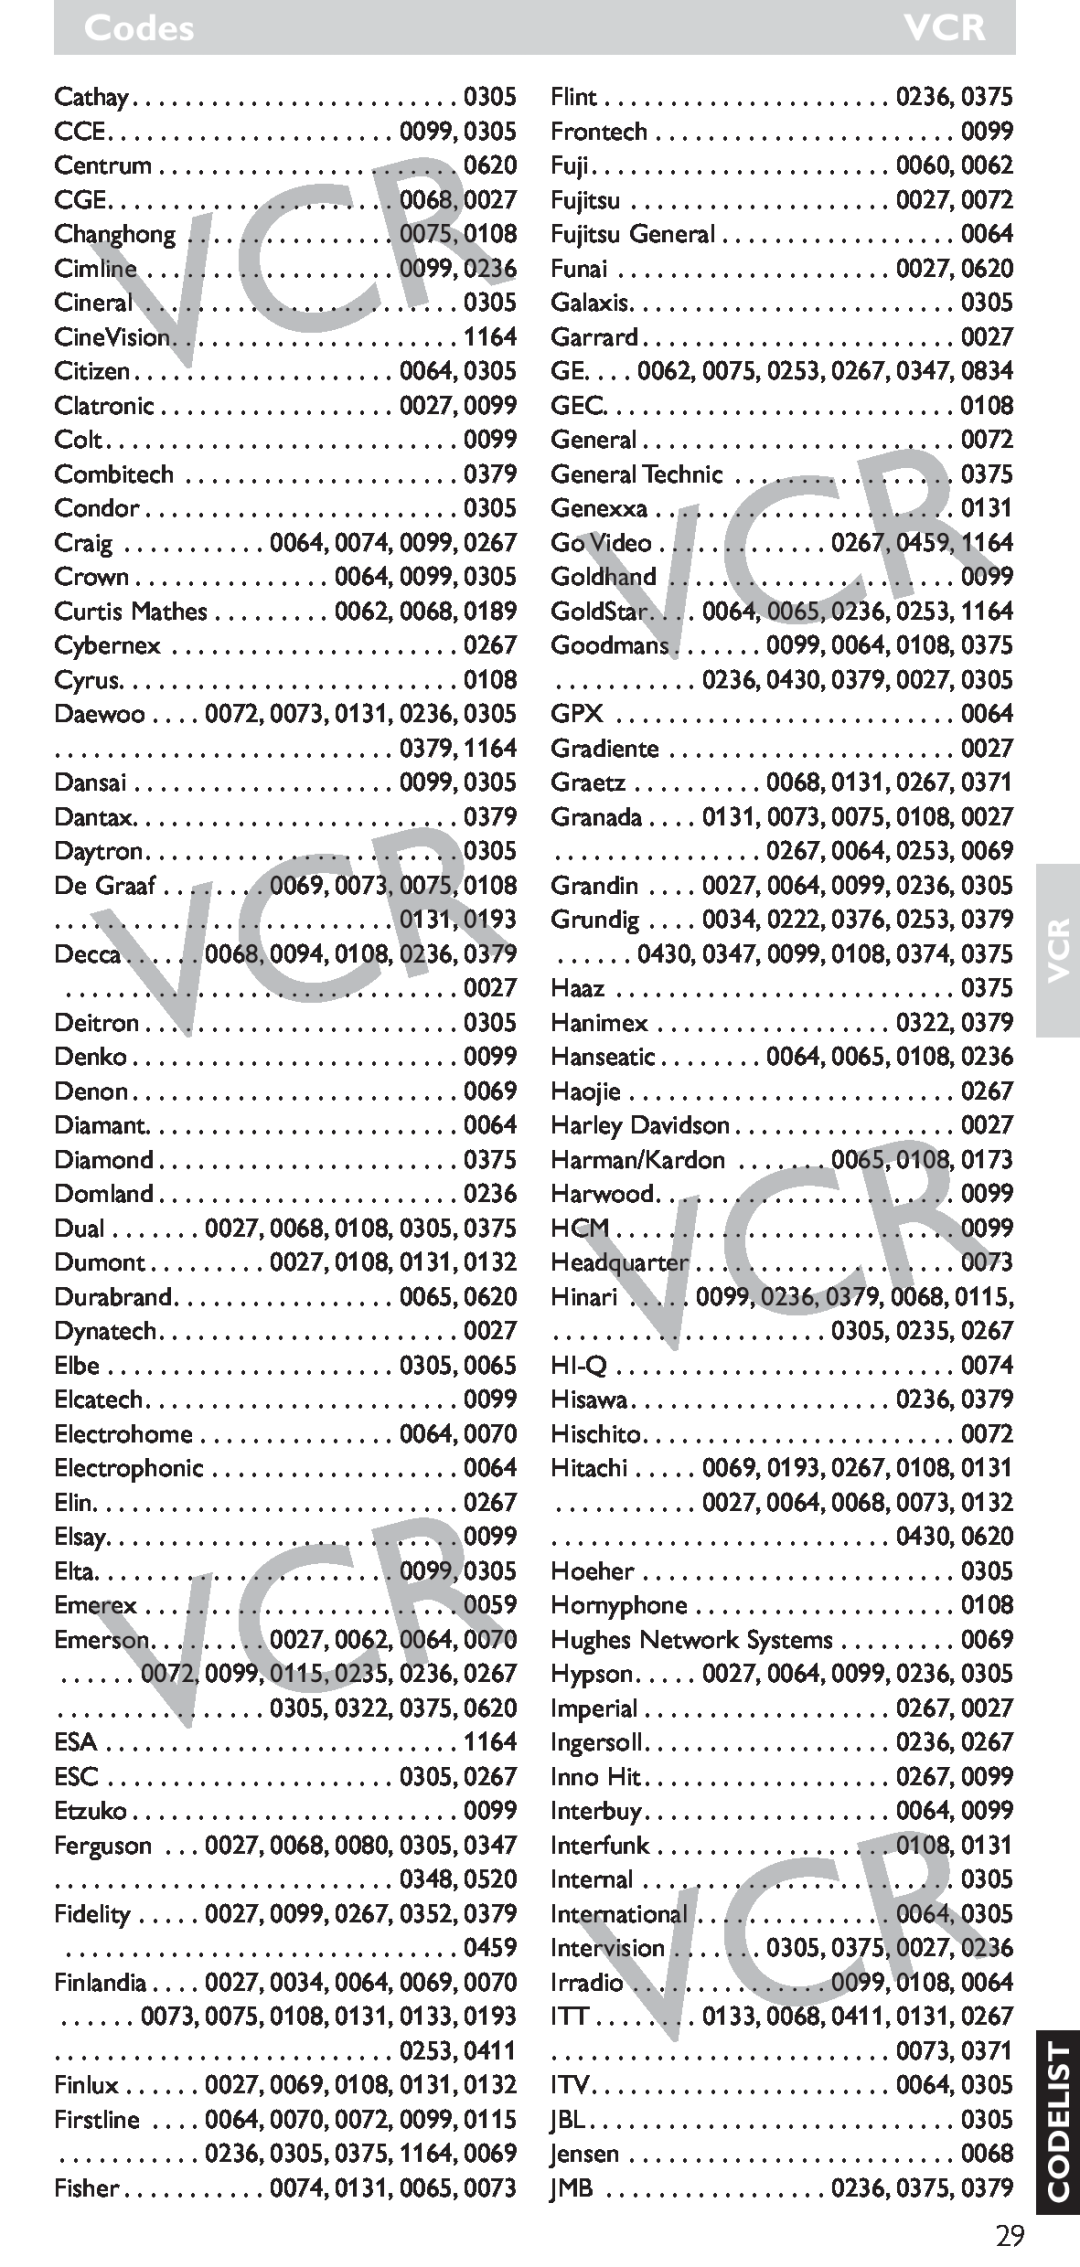 Hitachi SRU 5040/05 manual Vcr Codelist, Codes 